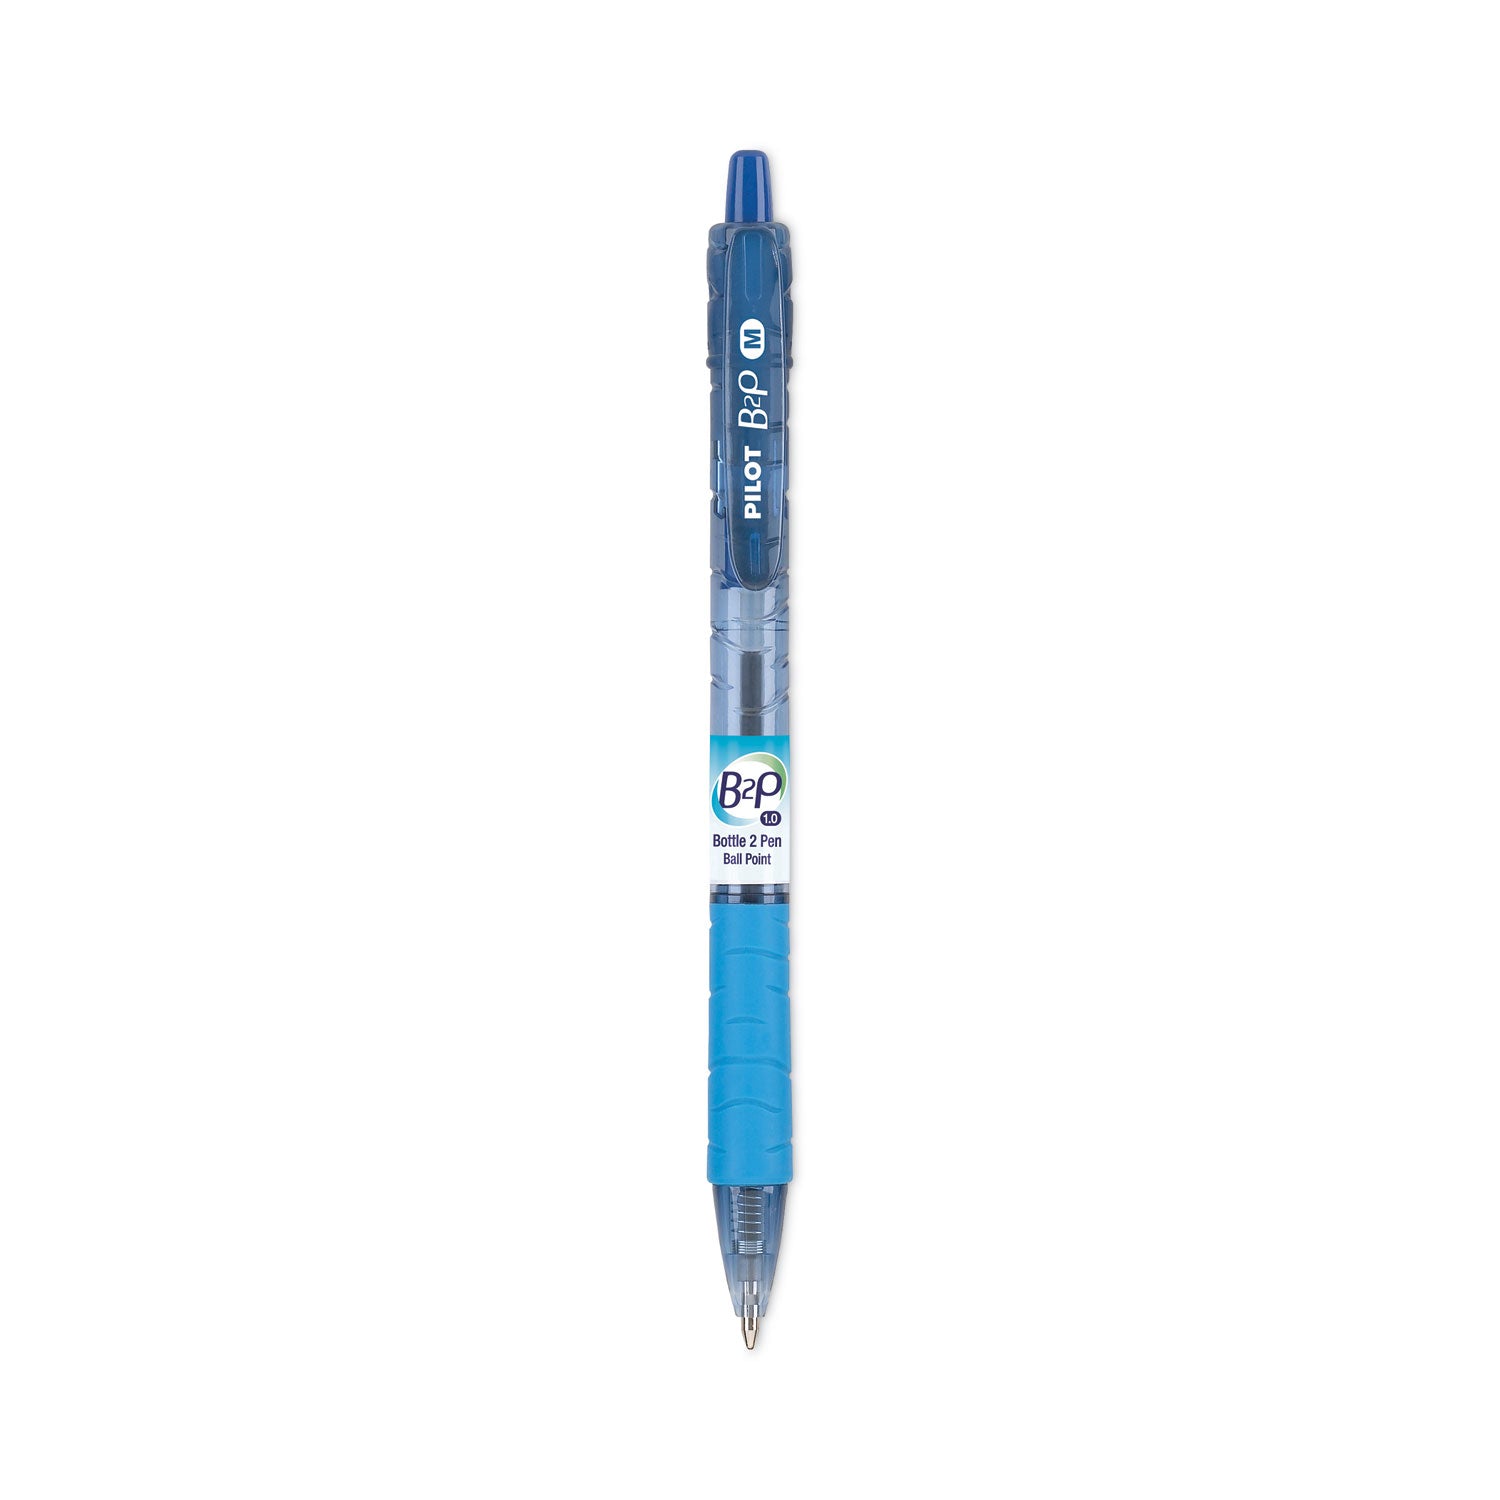 B2P Bottle-2-Pen Recycled Ballpoint Pen, Retractable, Medium 1 mm, Blue Ink, Translucent Blue Barrel, Dozen - 